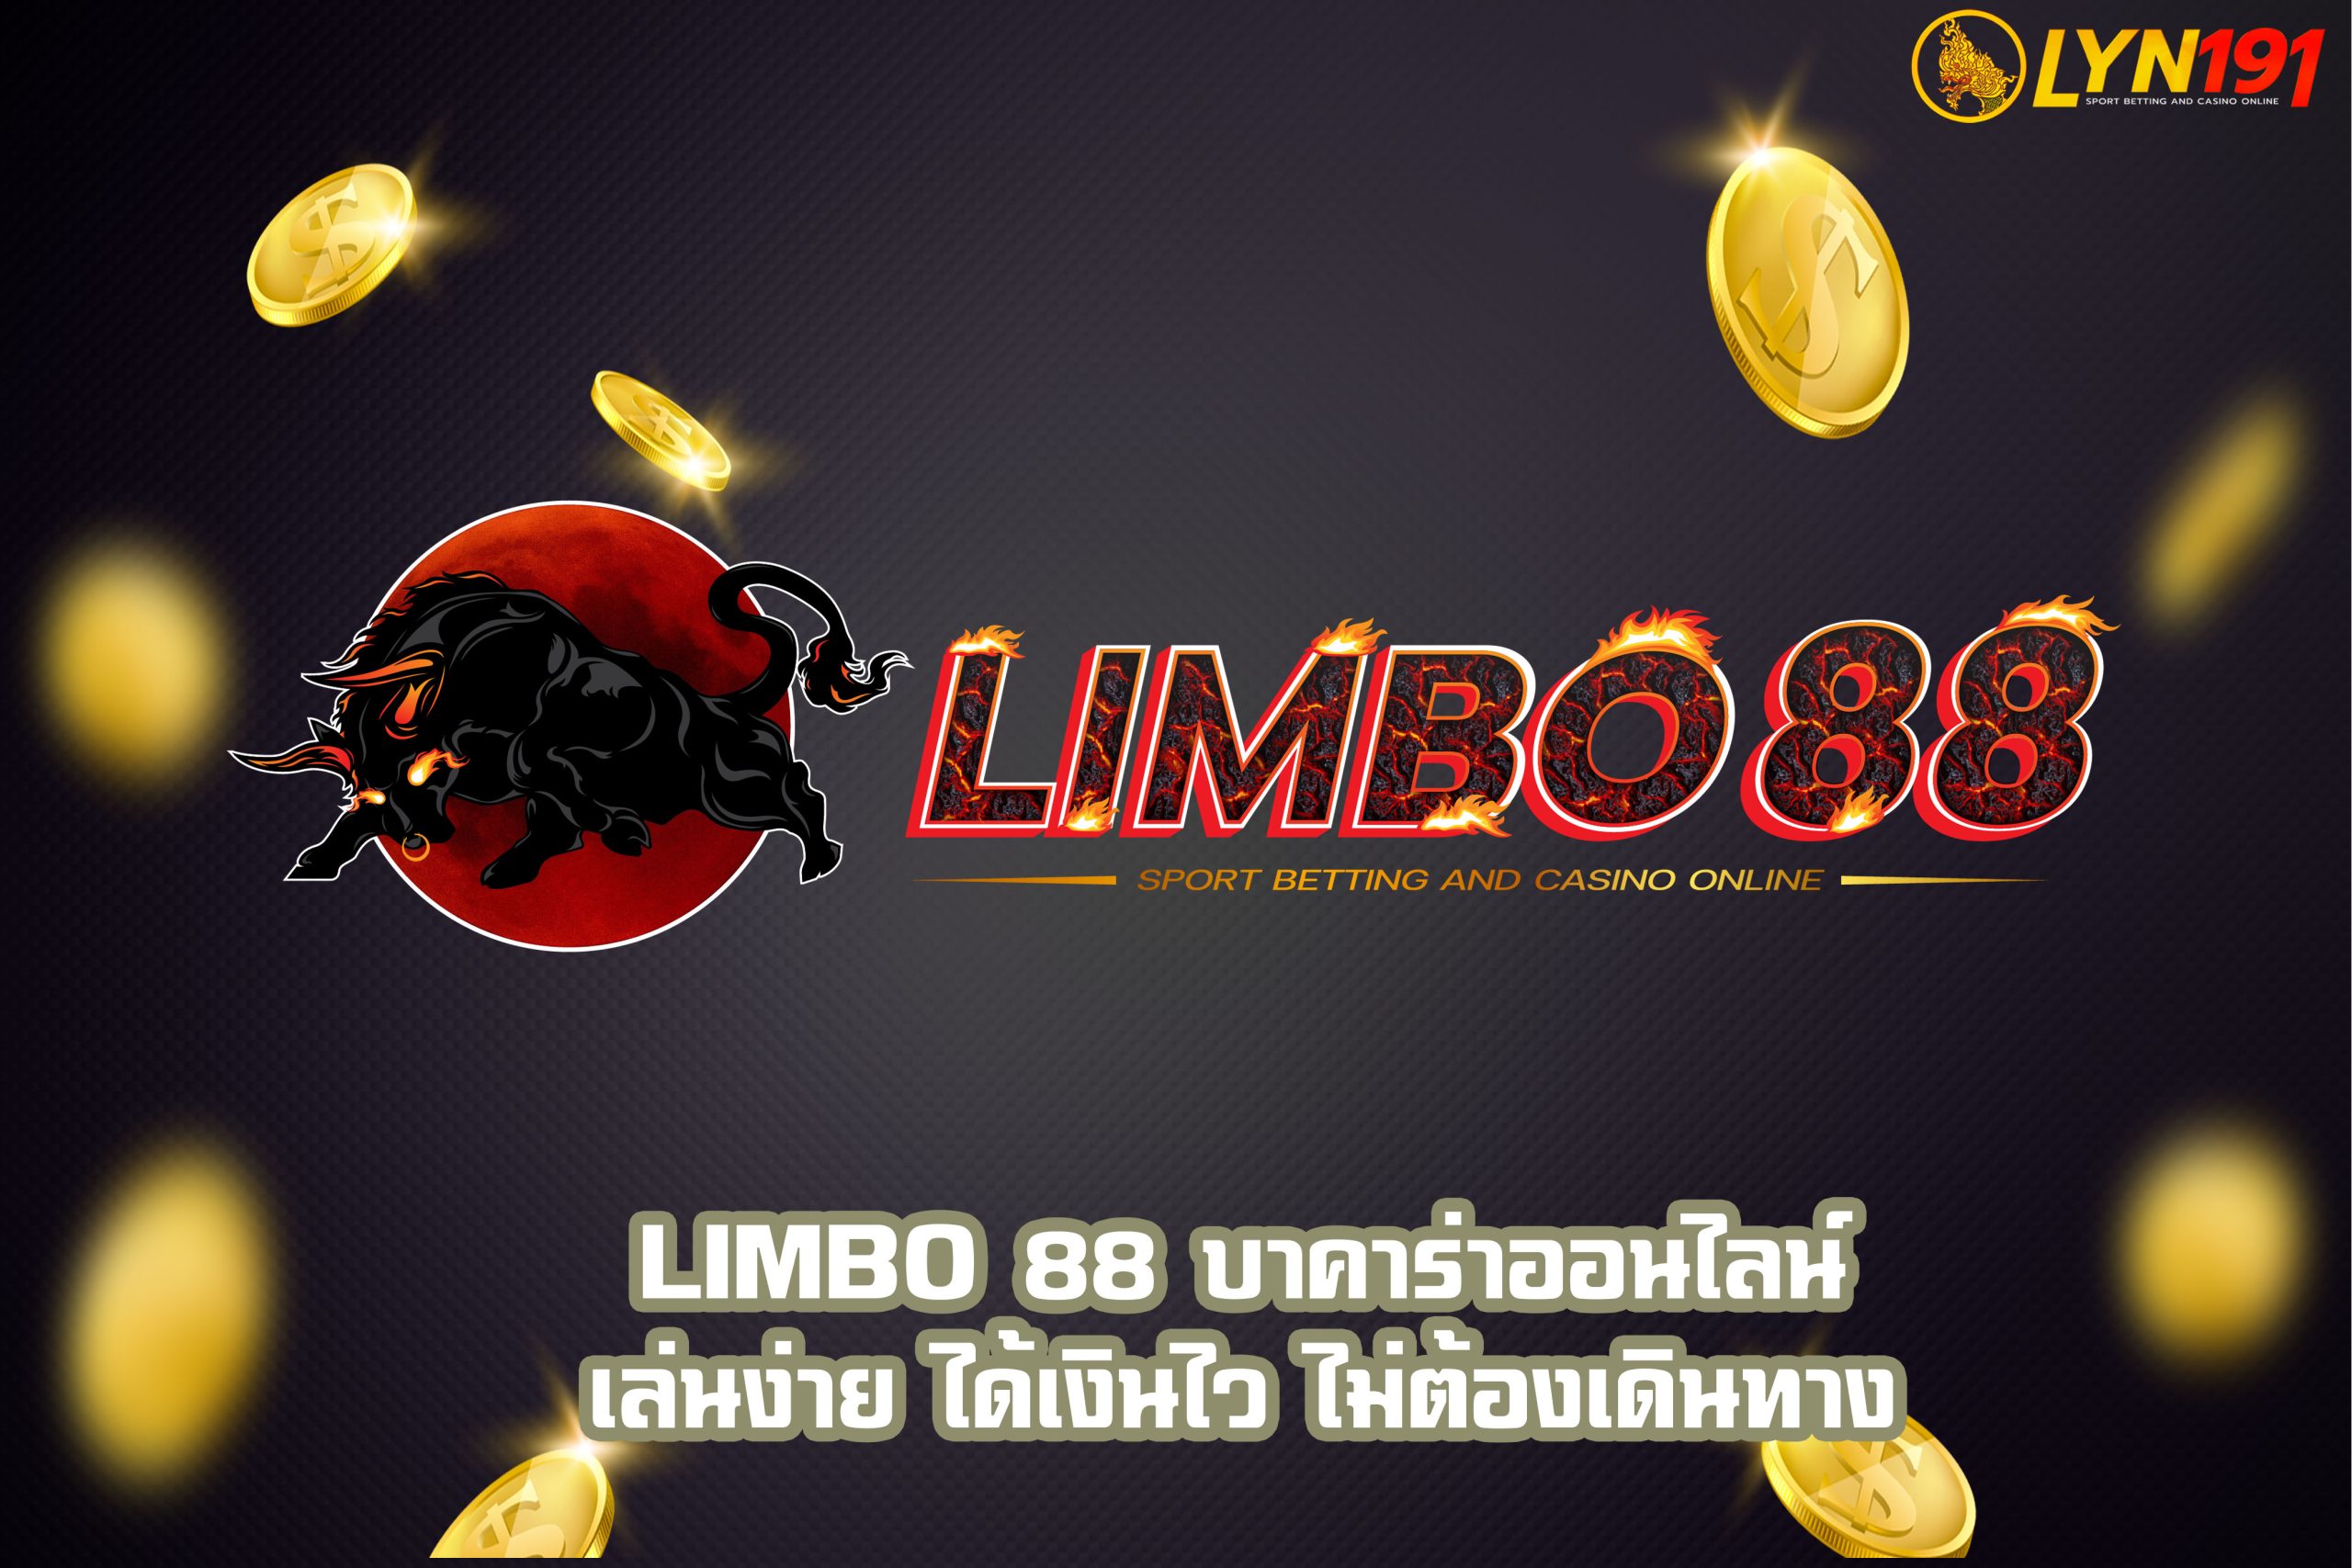 LIMBO 88 บาคาร่าออนไลน์ เล่นง่าย ได้เงินไว ไม่ต้องเดินทาง